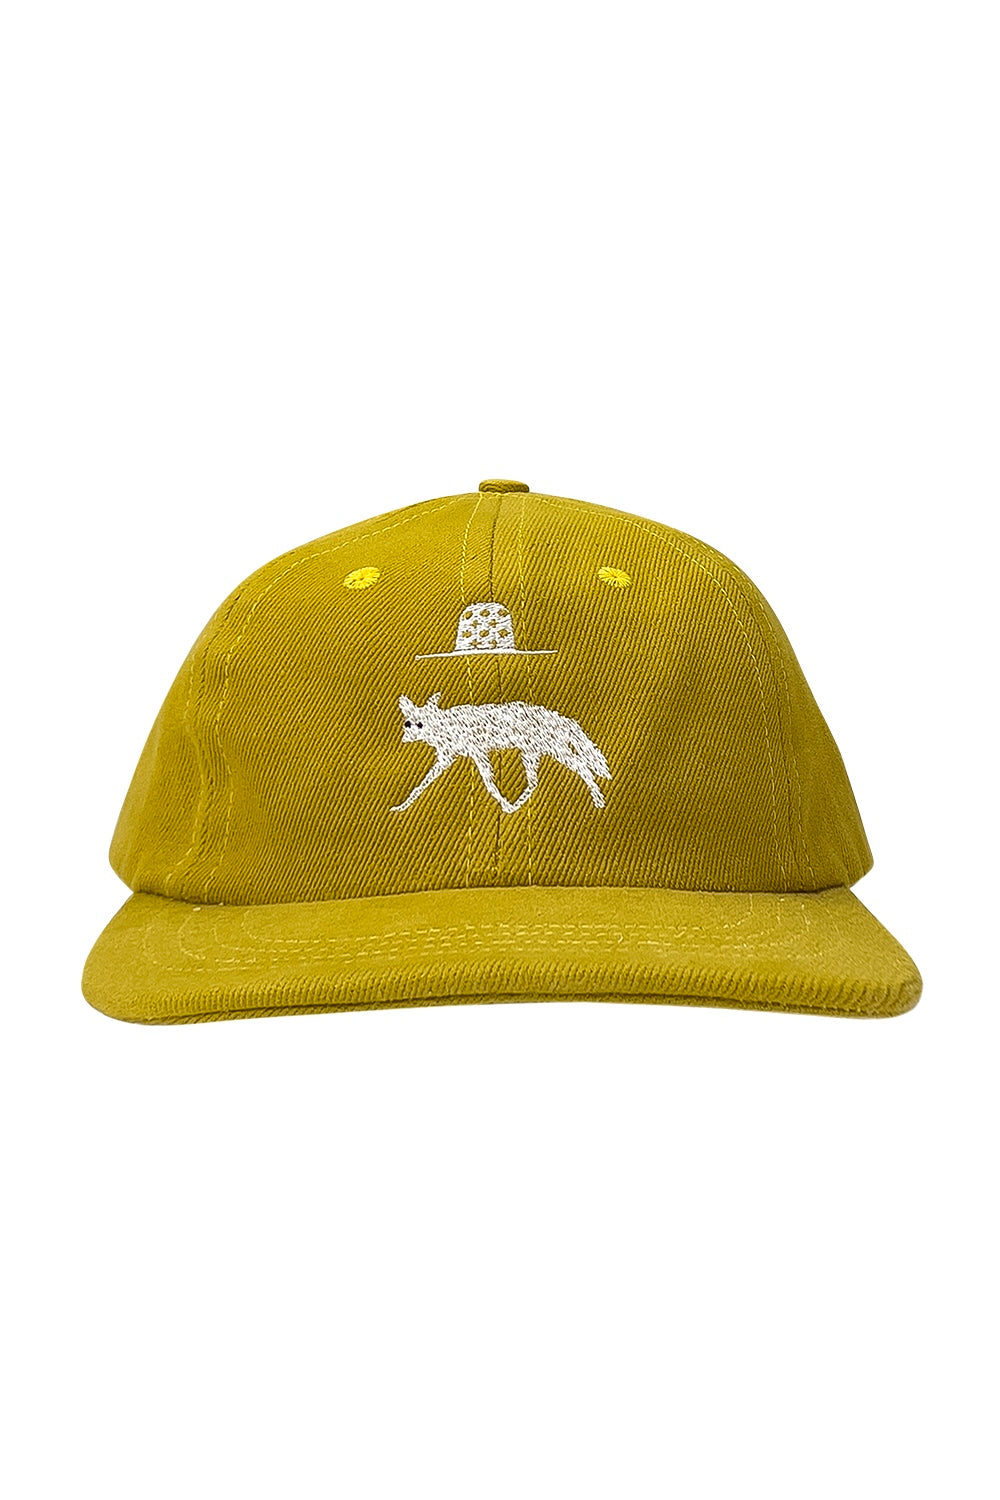 Coyote Twill Cap | Jungmaven Hemp Clothing & Accessories / Color:Citrine Yellow